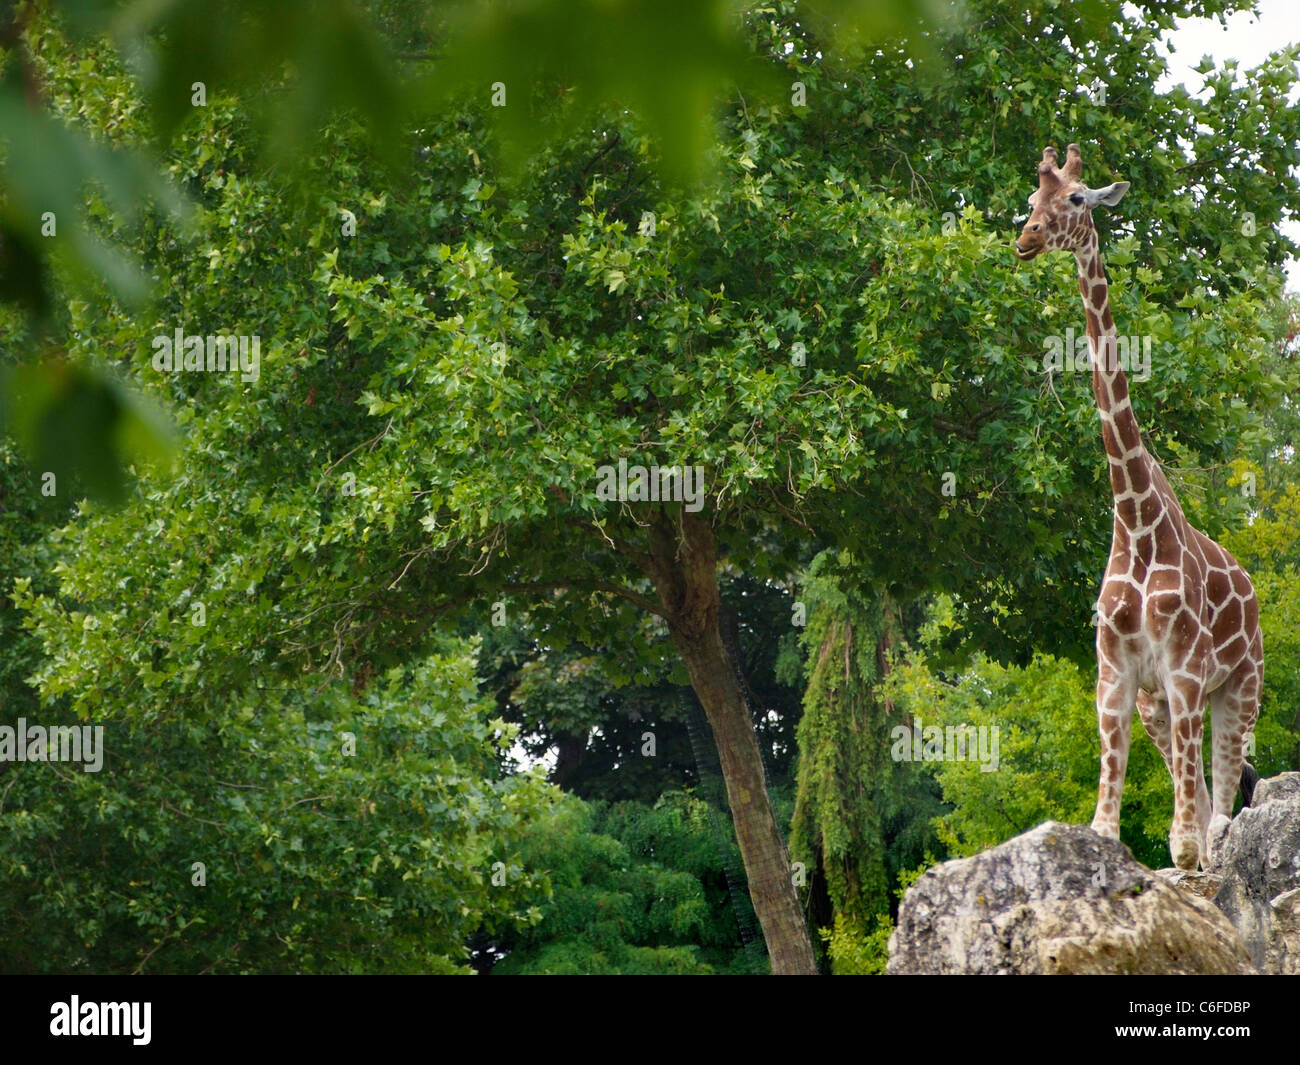 Rothschild Giraffe in Zooparc de Beauval, Loire valley, France Stock Photo